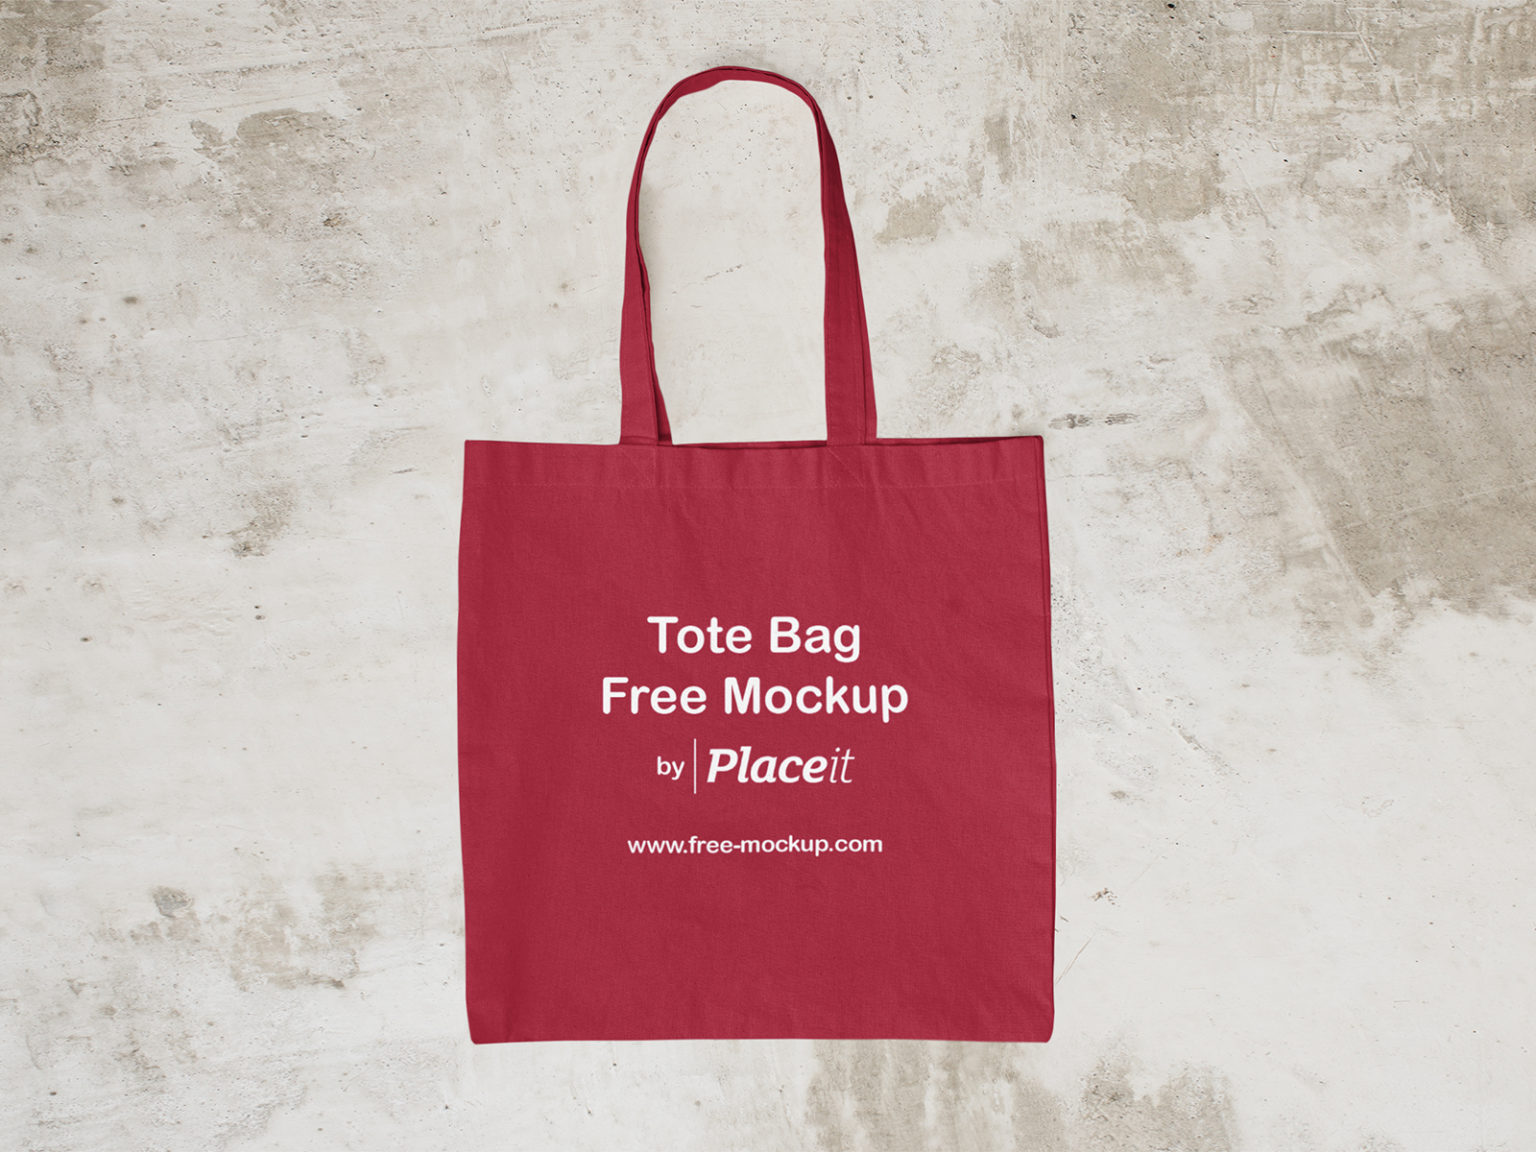 Free tote bag mockup generator information